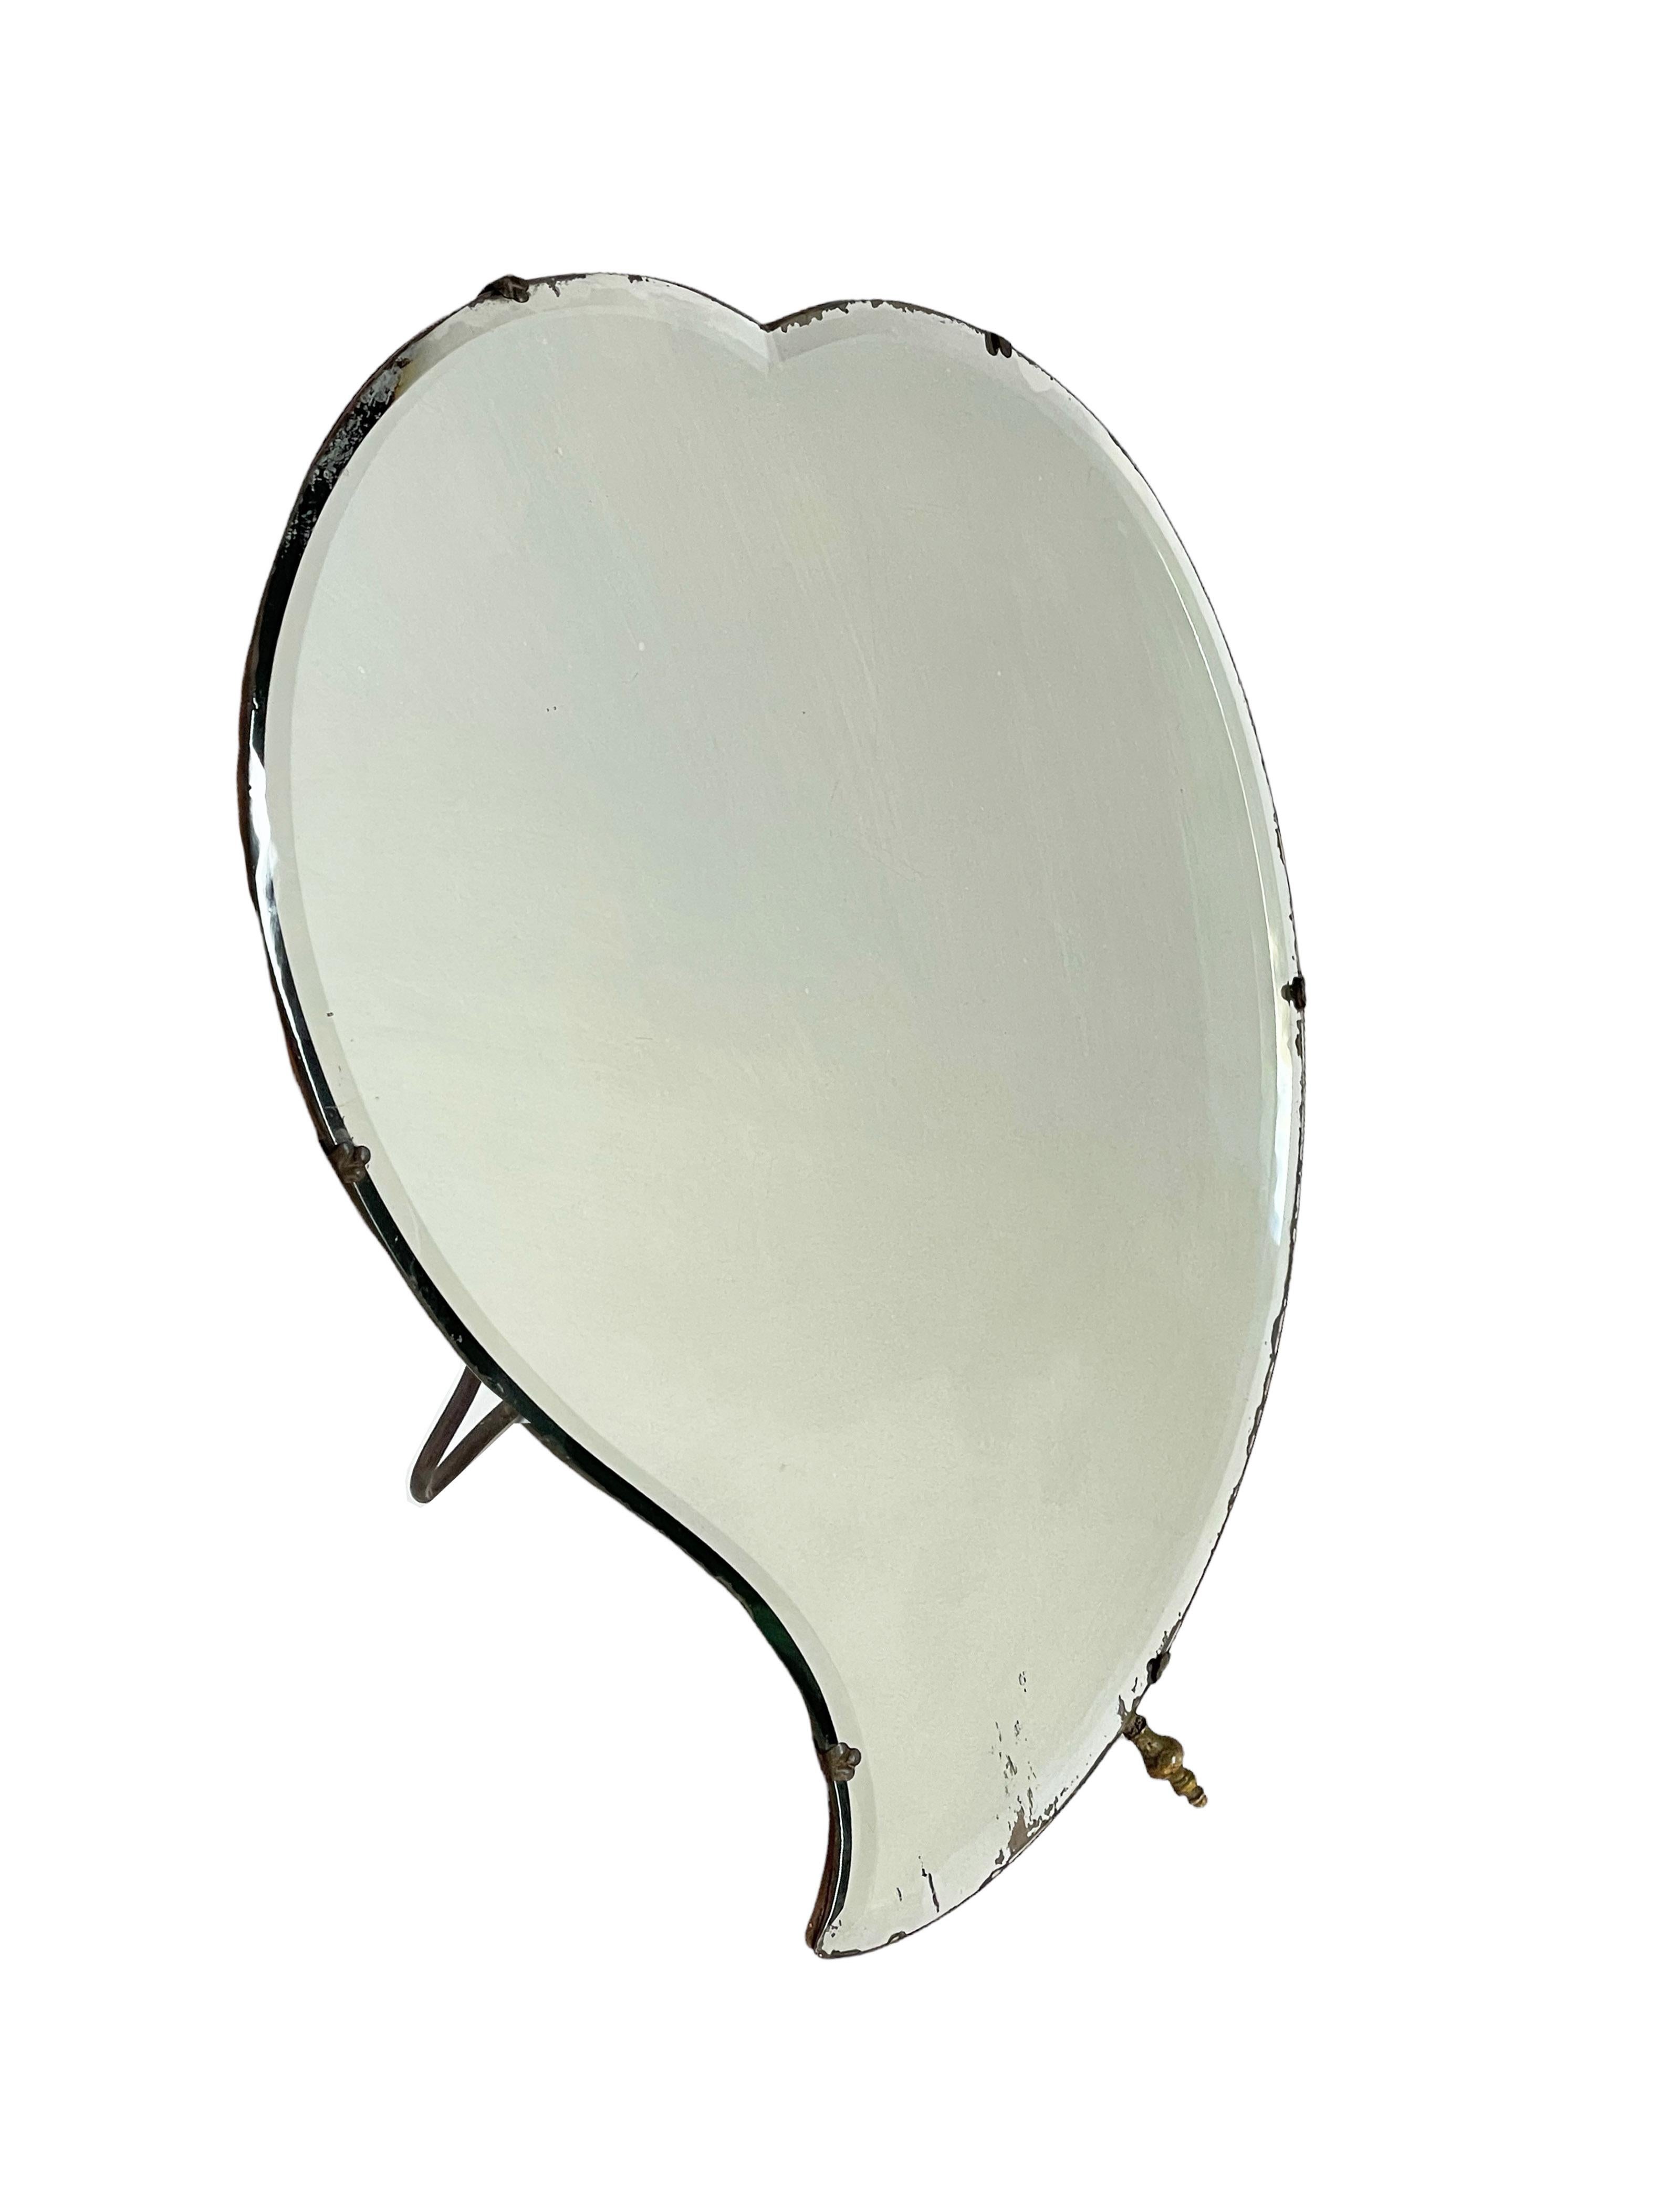 Luigi Fontana Midcentury Italian Heart Shaped Cherry Wood Table Mirror, 1940s For Sale 5